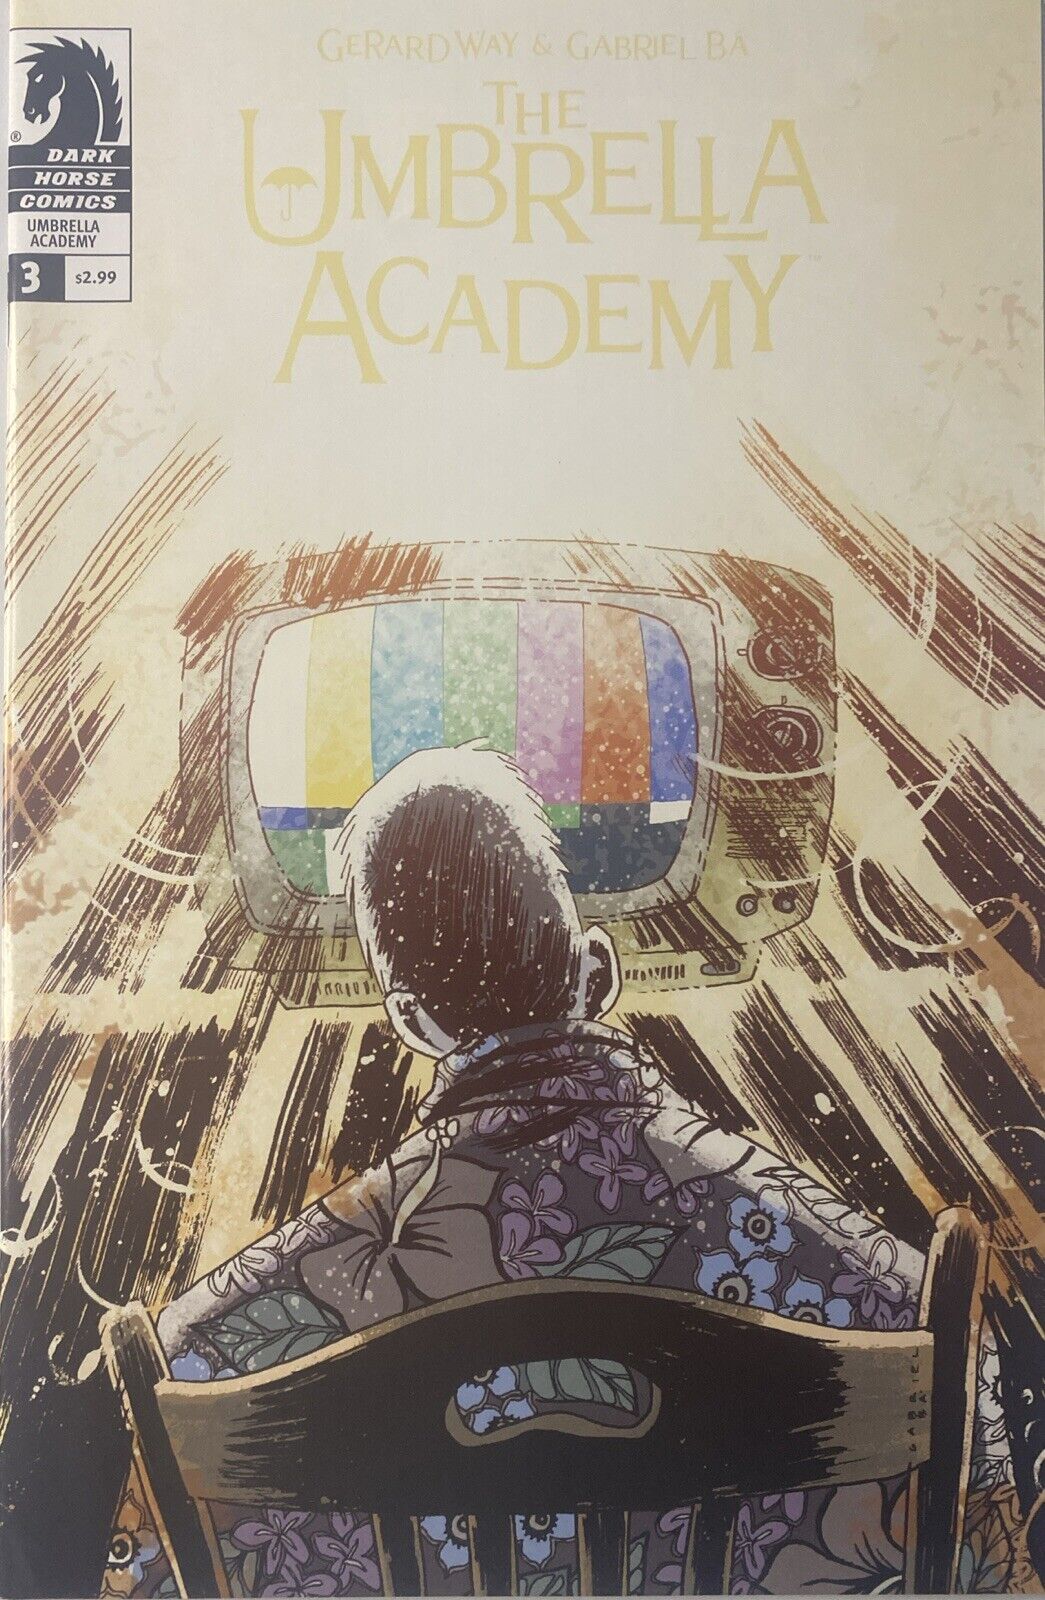 The Umbrella Academy Issue #3 - Dark Horse Comics